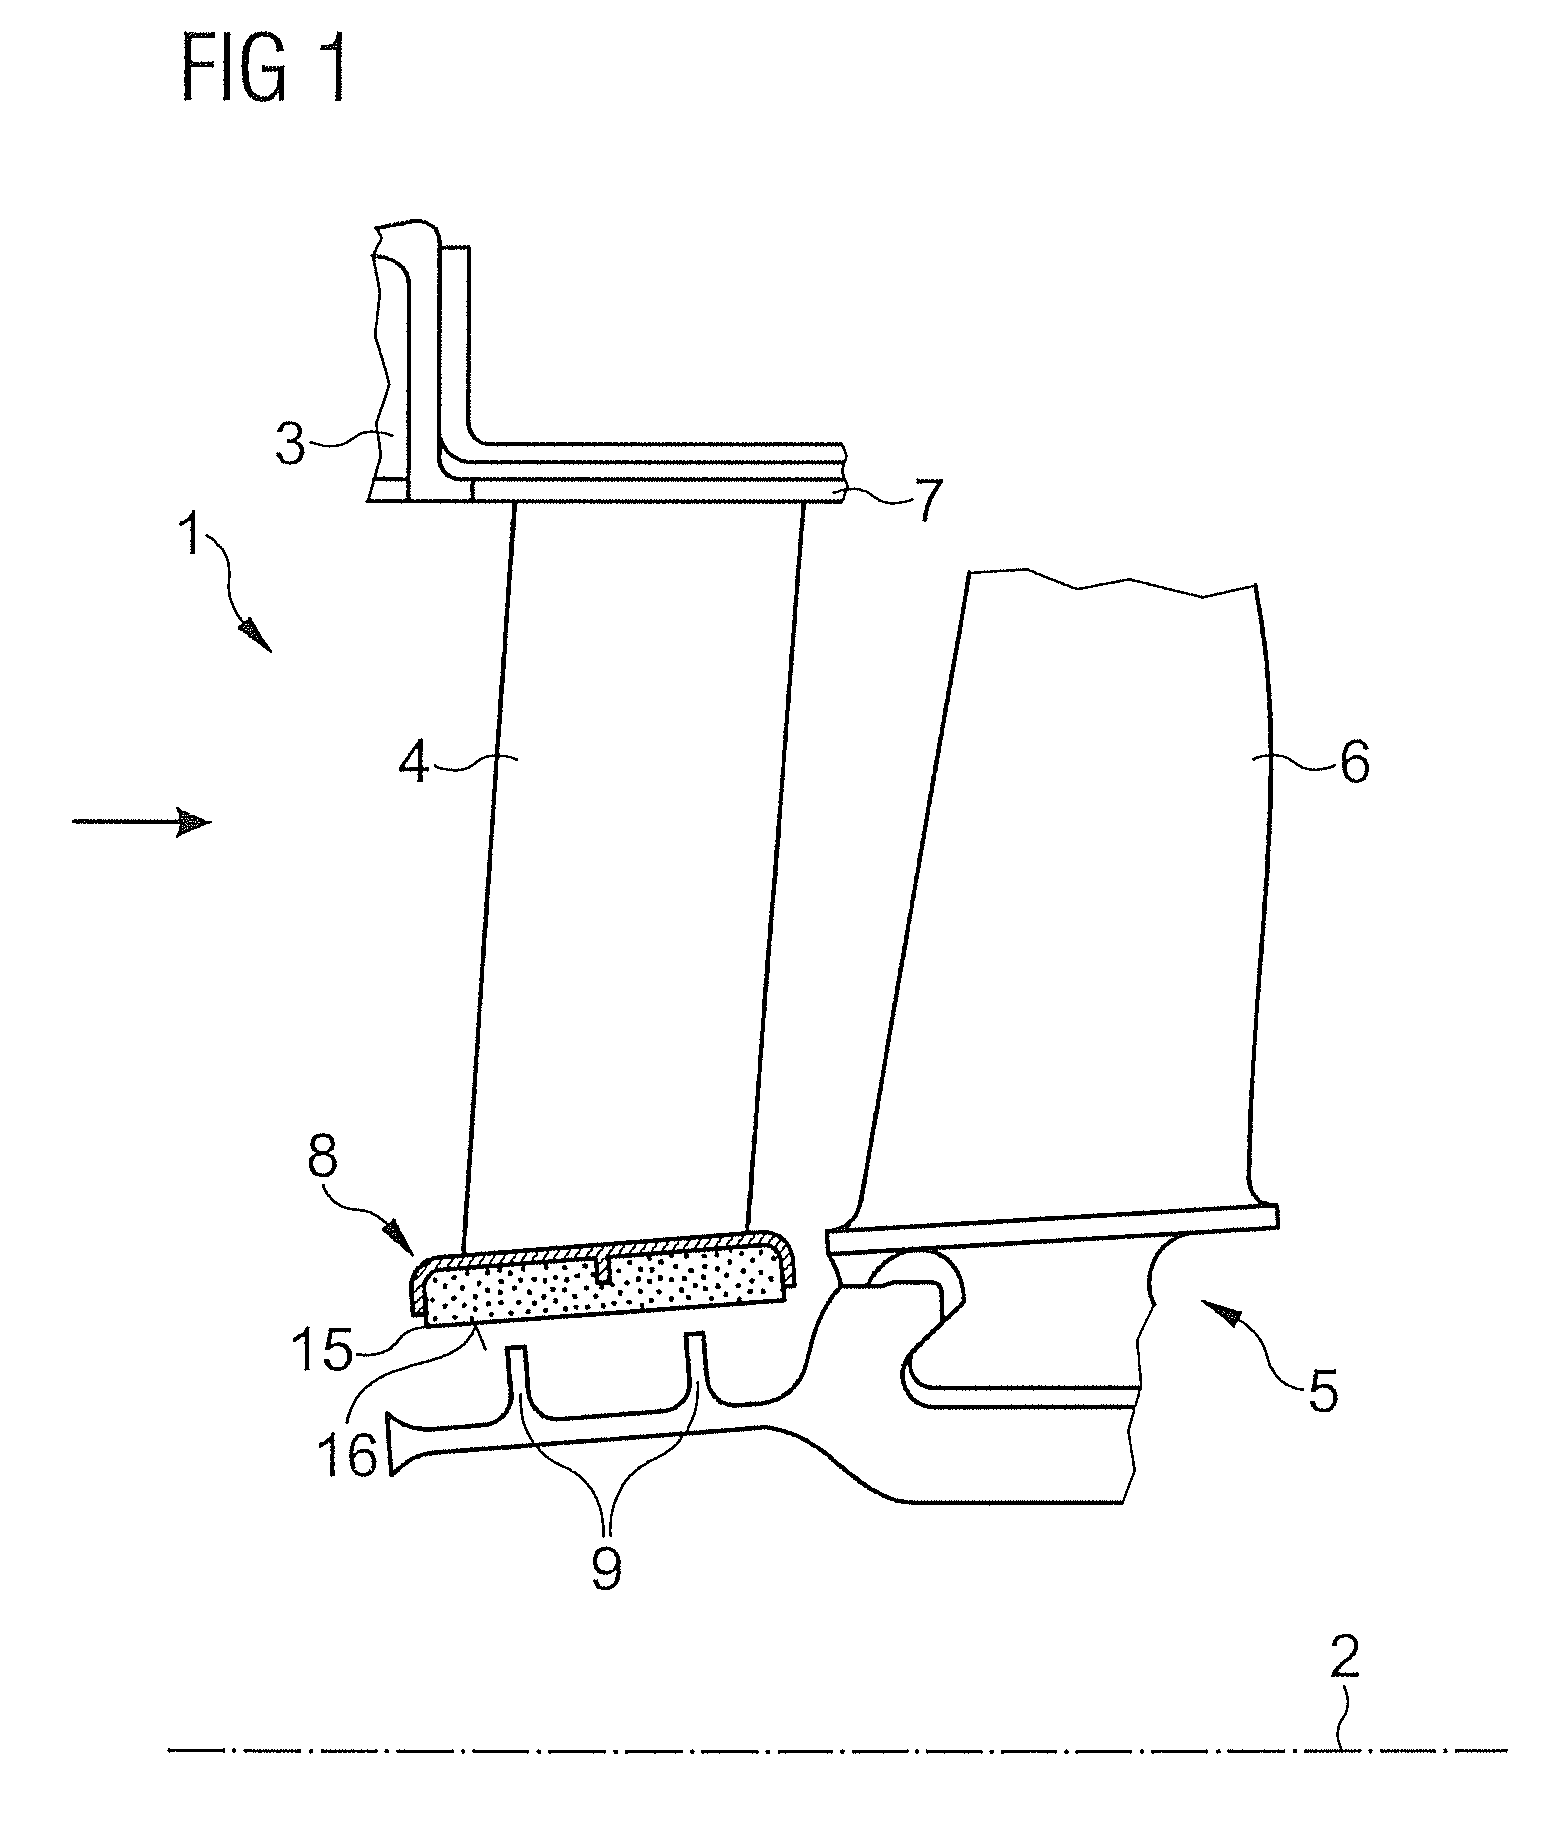 Segmented composite inner ferrule and segment of diffuser of axial compressor